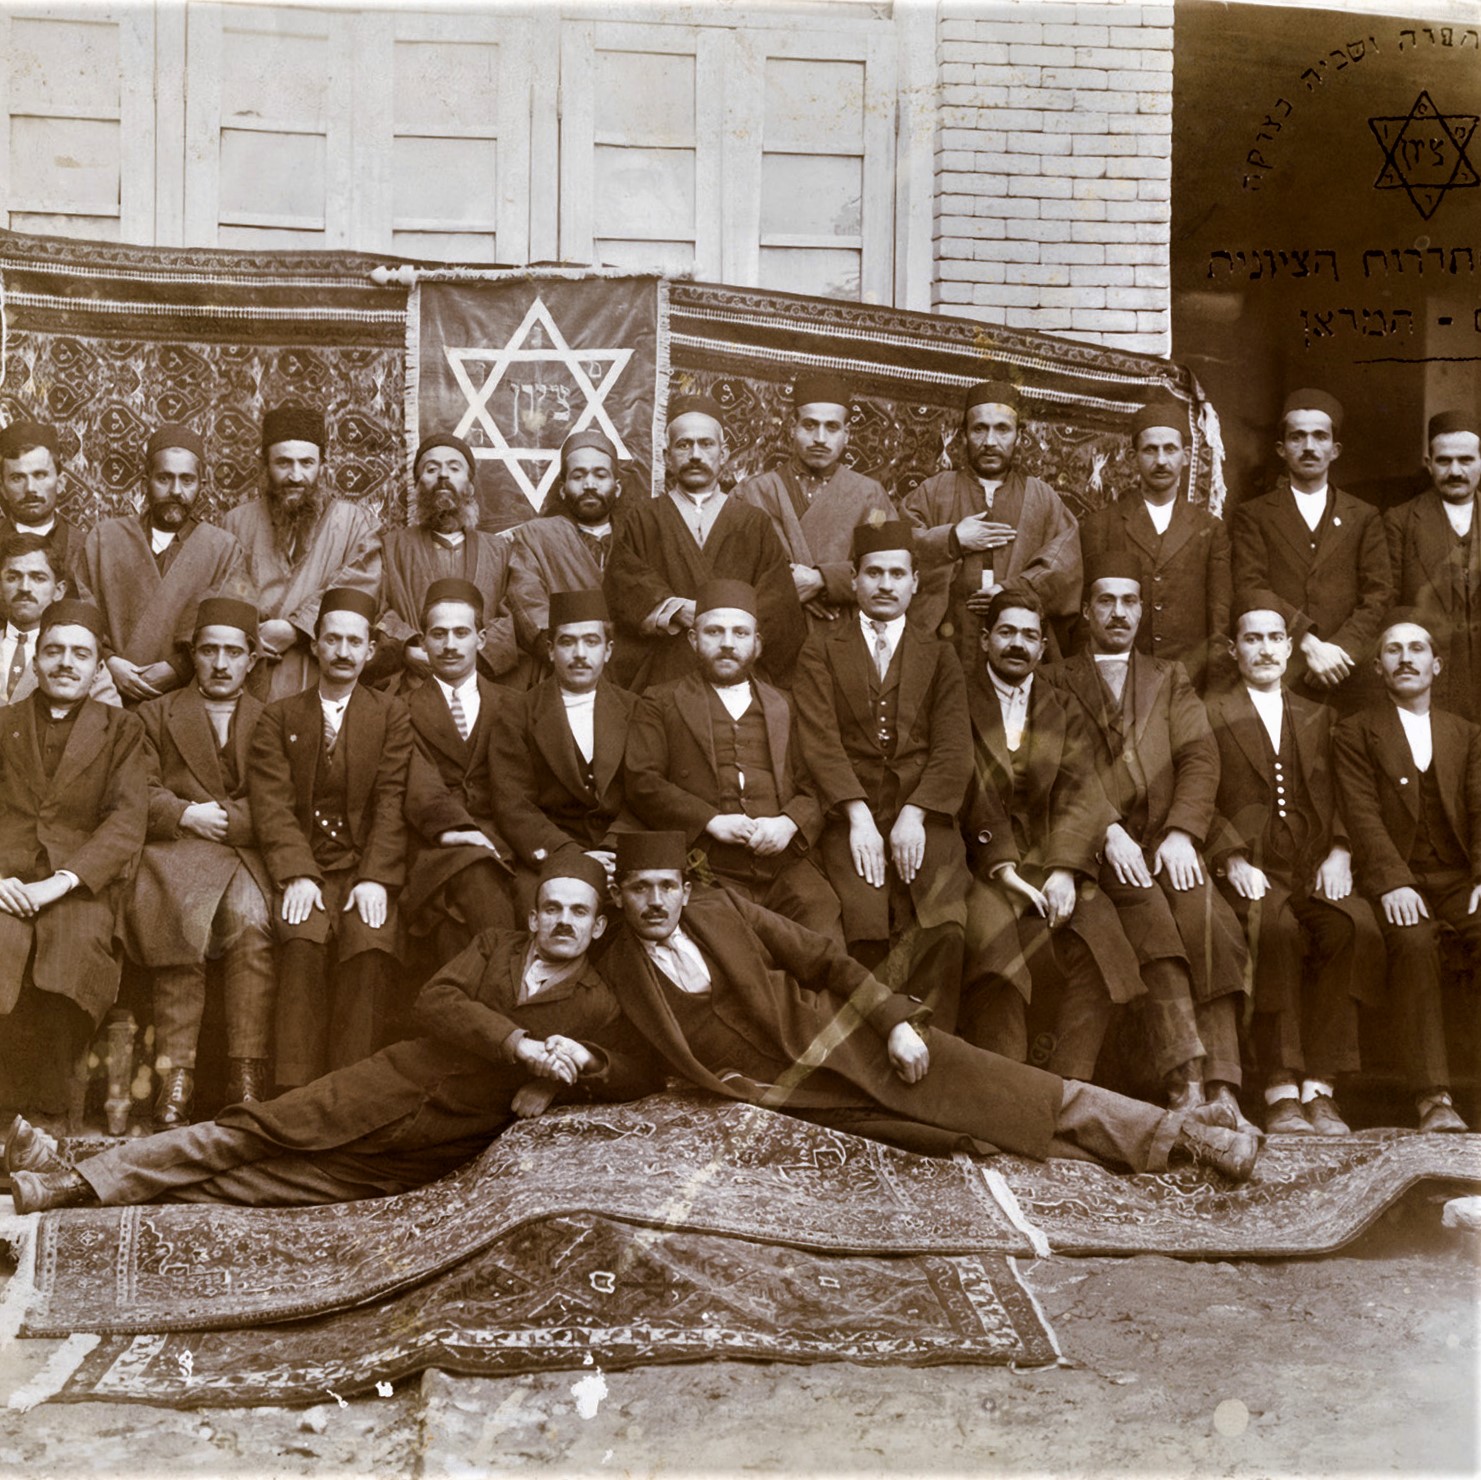 Historic Wikipedia photo depicting Jews of Iran